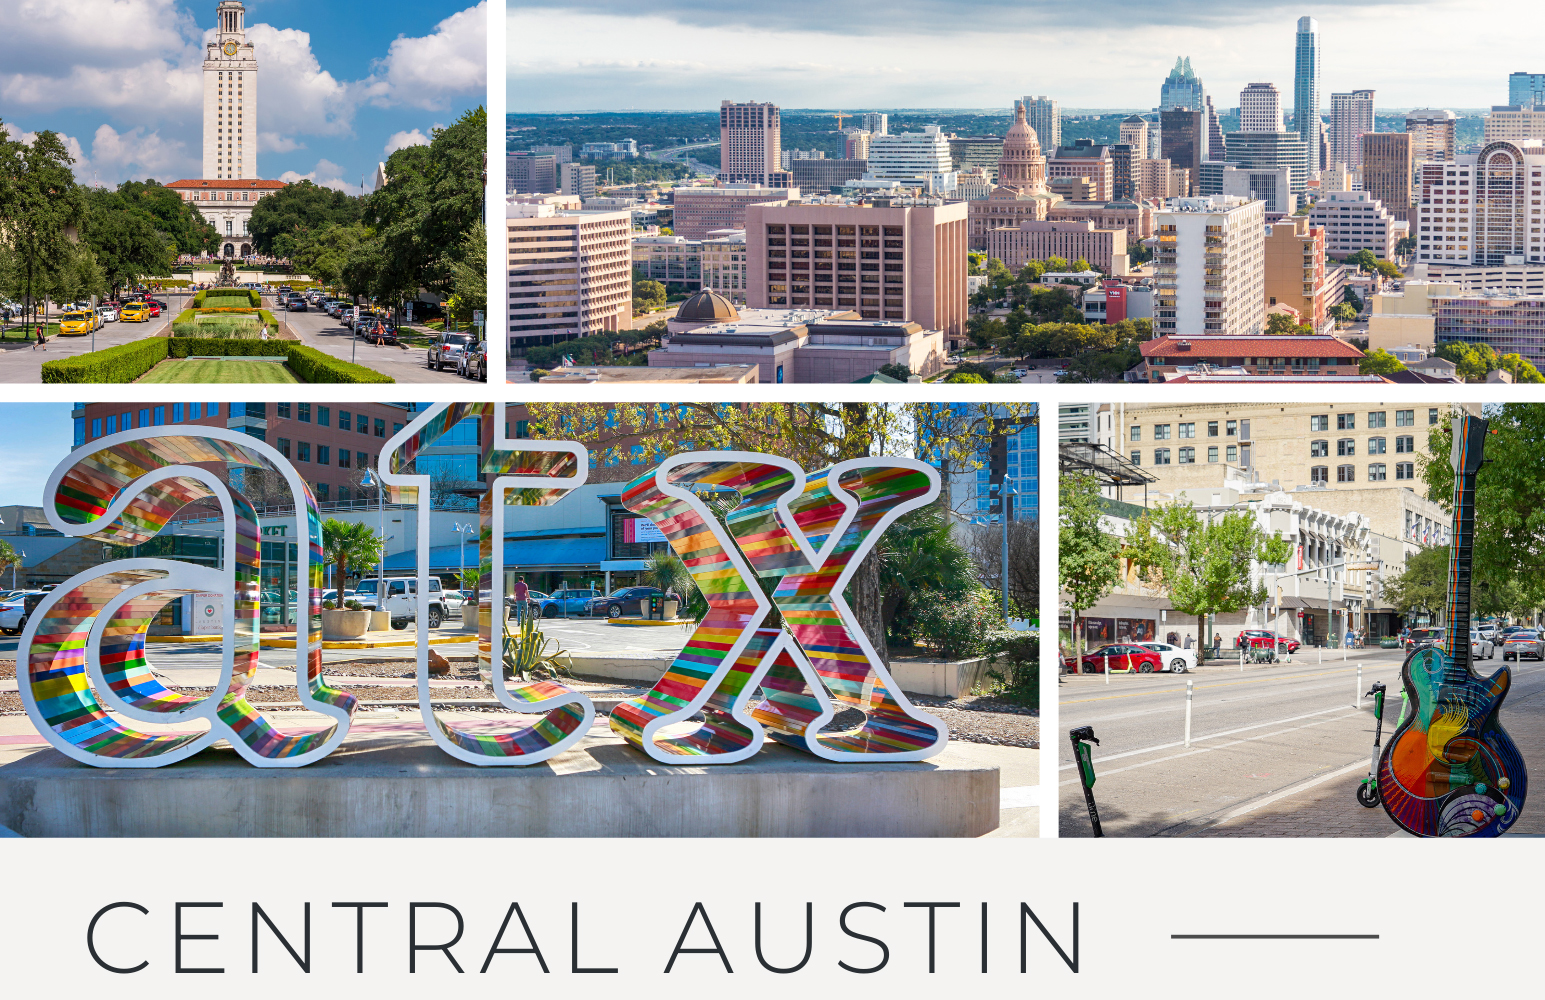 Central Austin